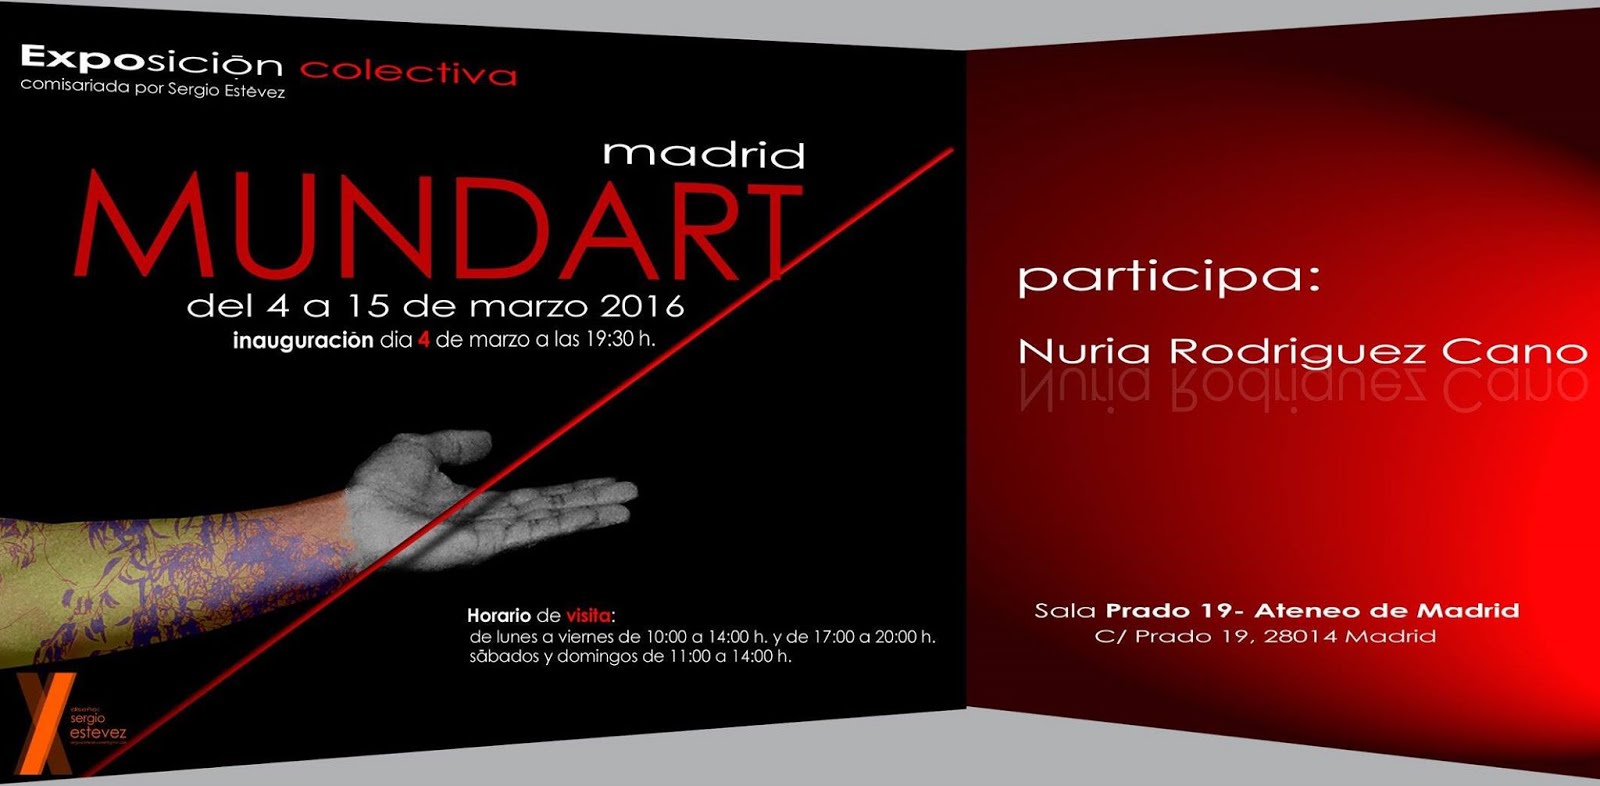 Mundart 2016 Madrid